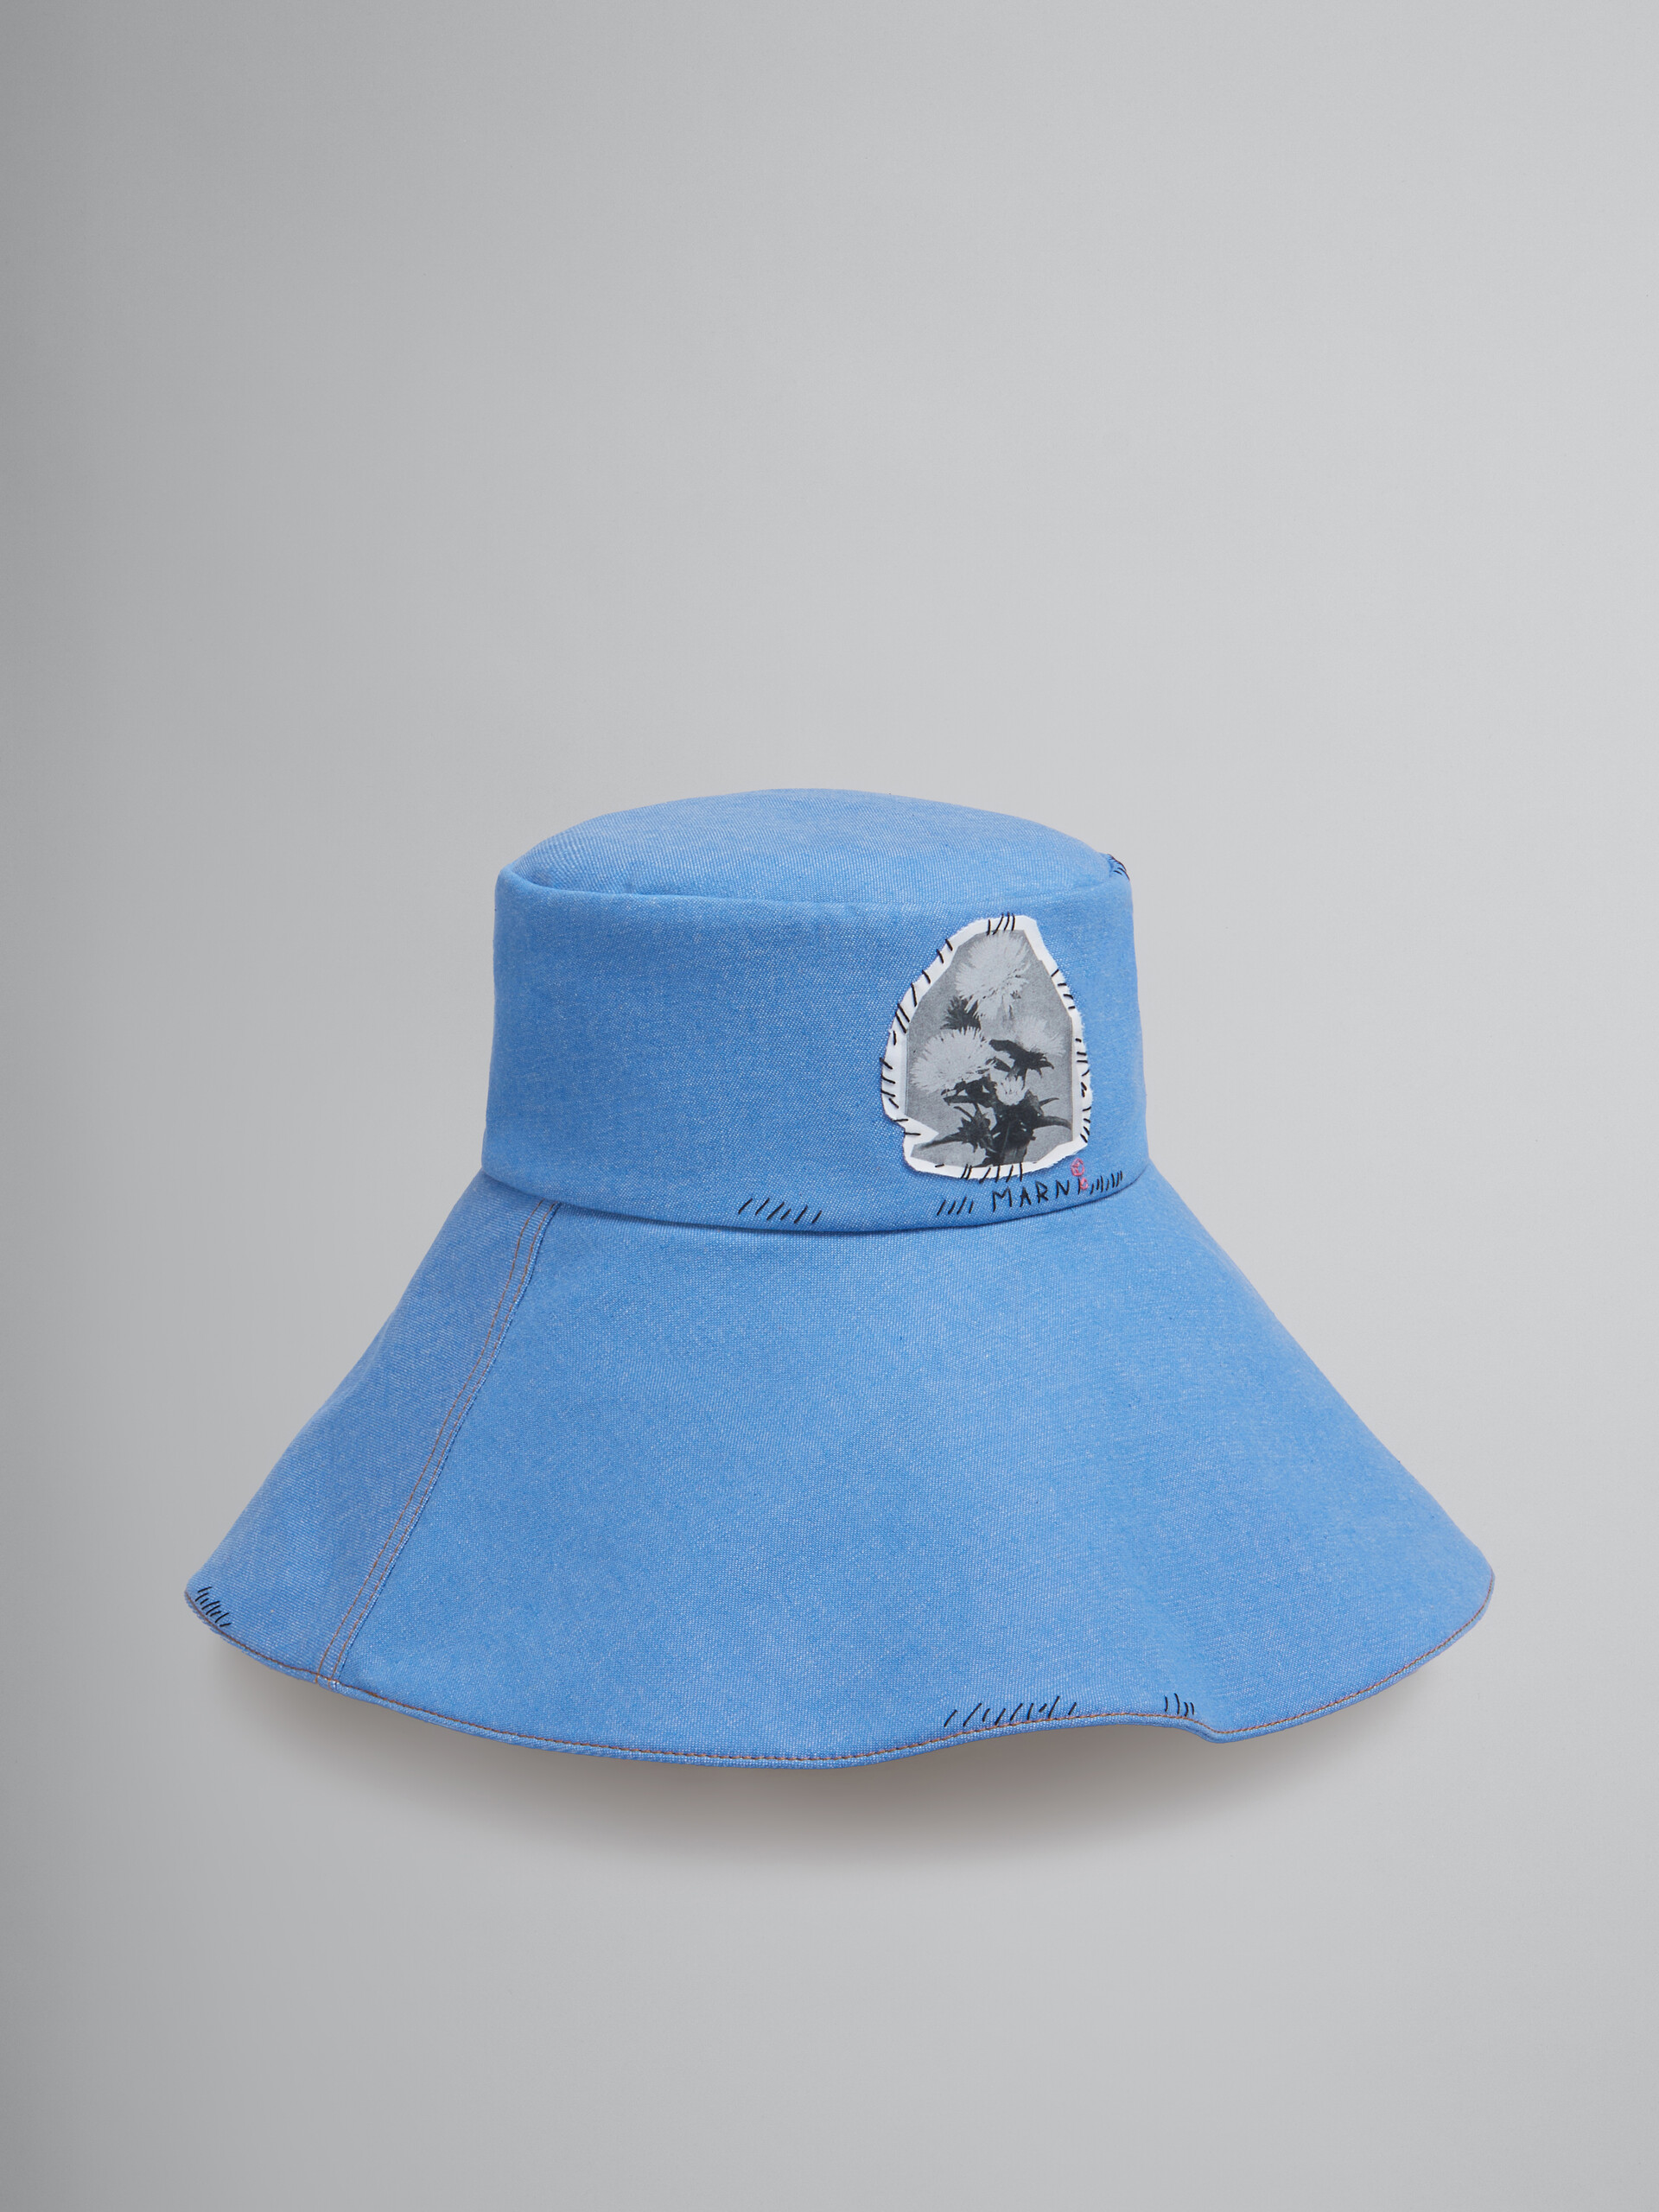 Bob en denim bleu avec effet raccommodé Marni - Chapeau - Image 1